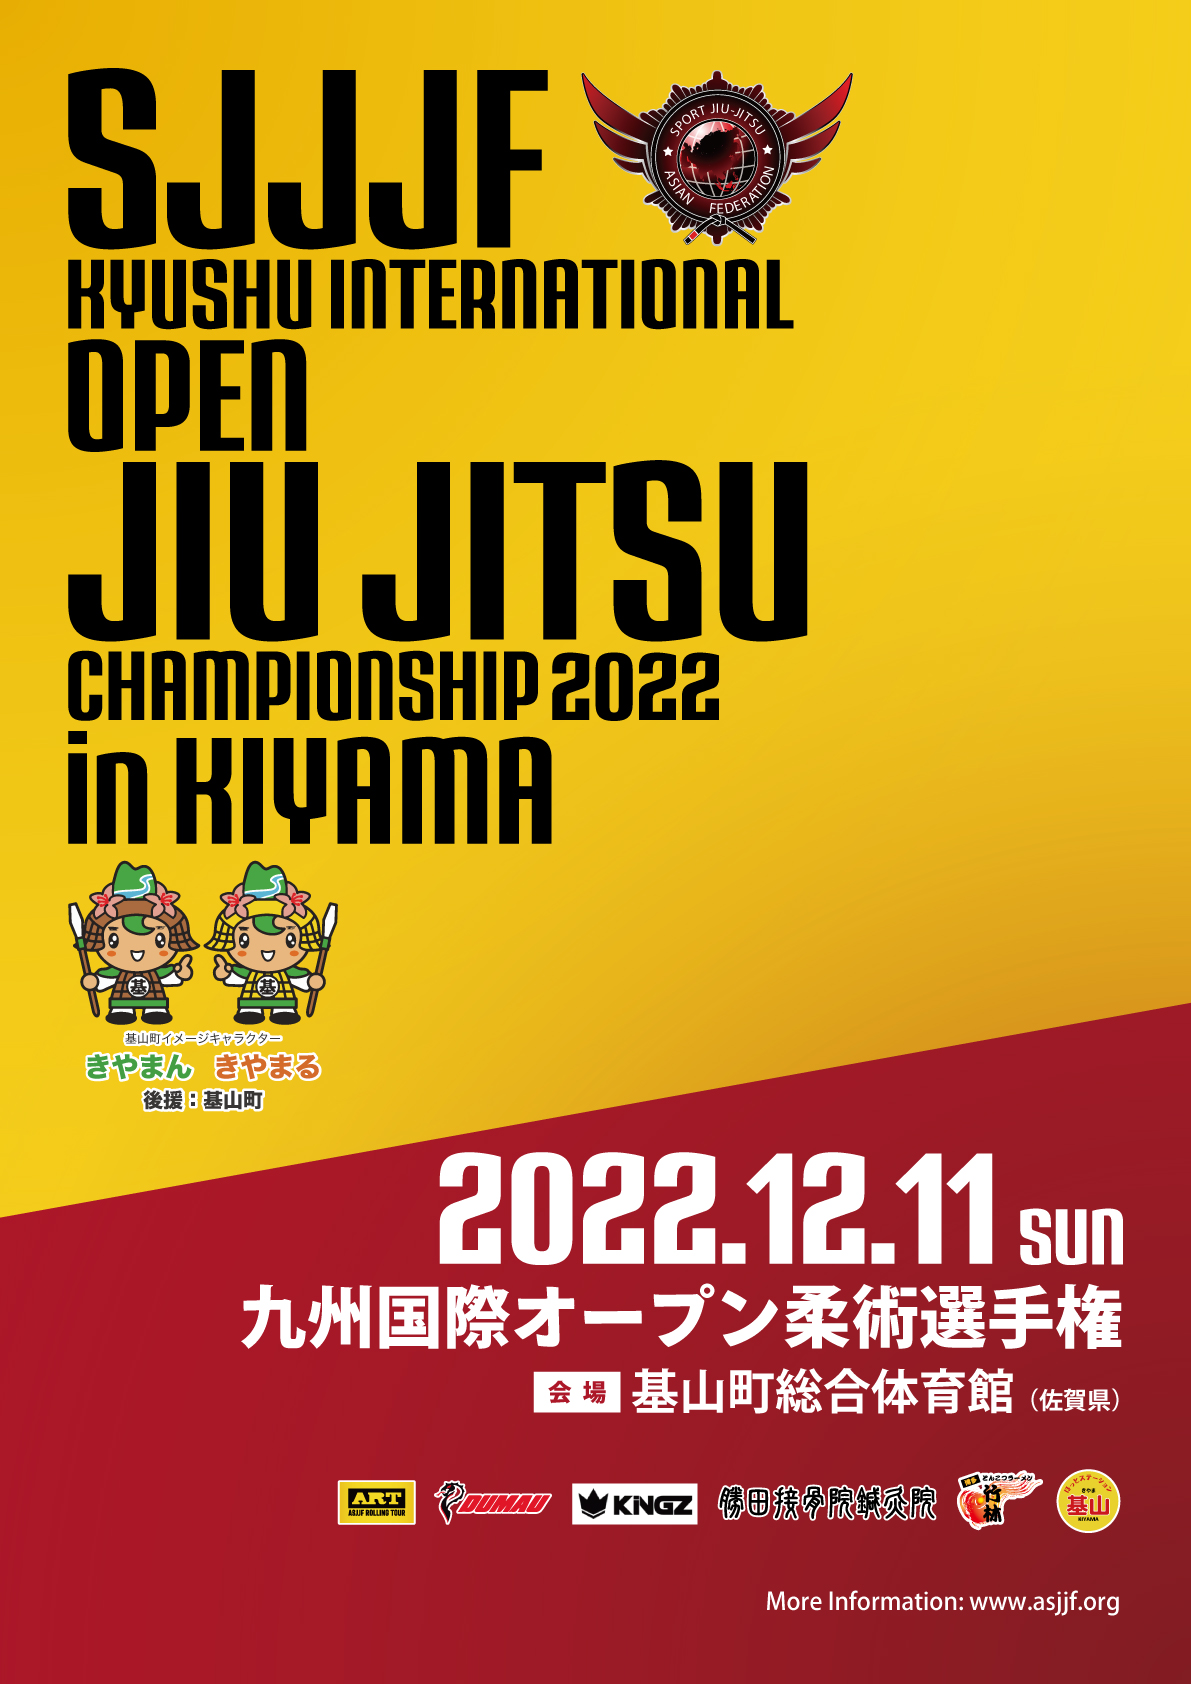 kyushu international open jiu jitsu championship 2022